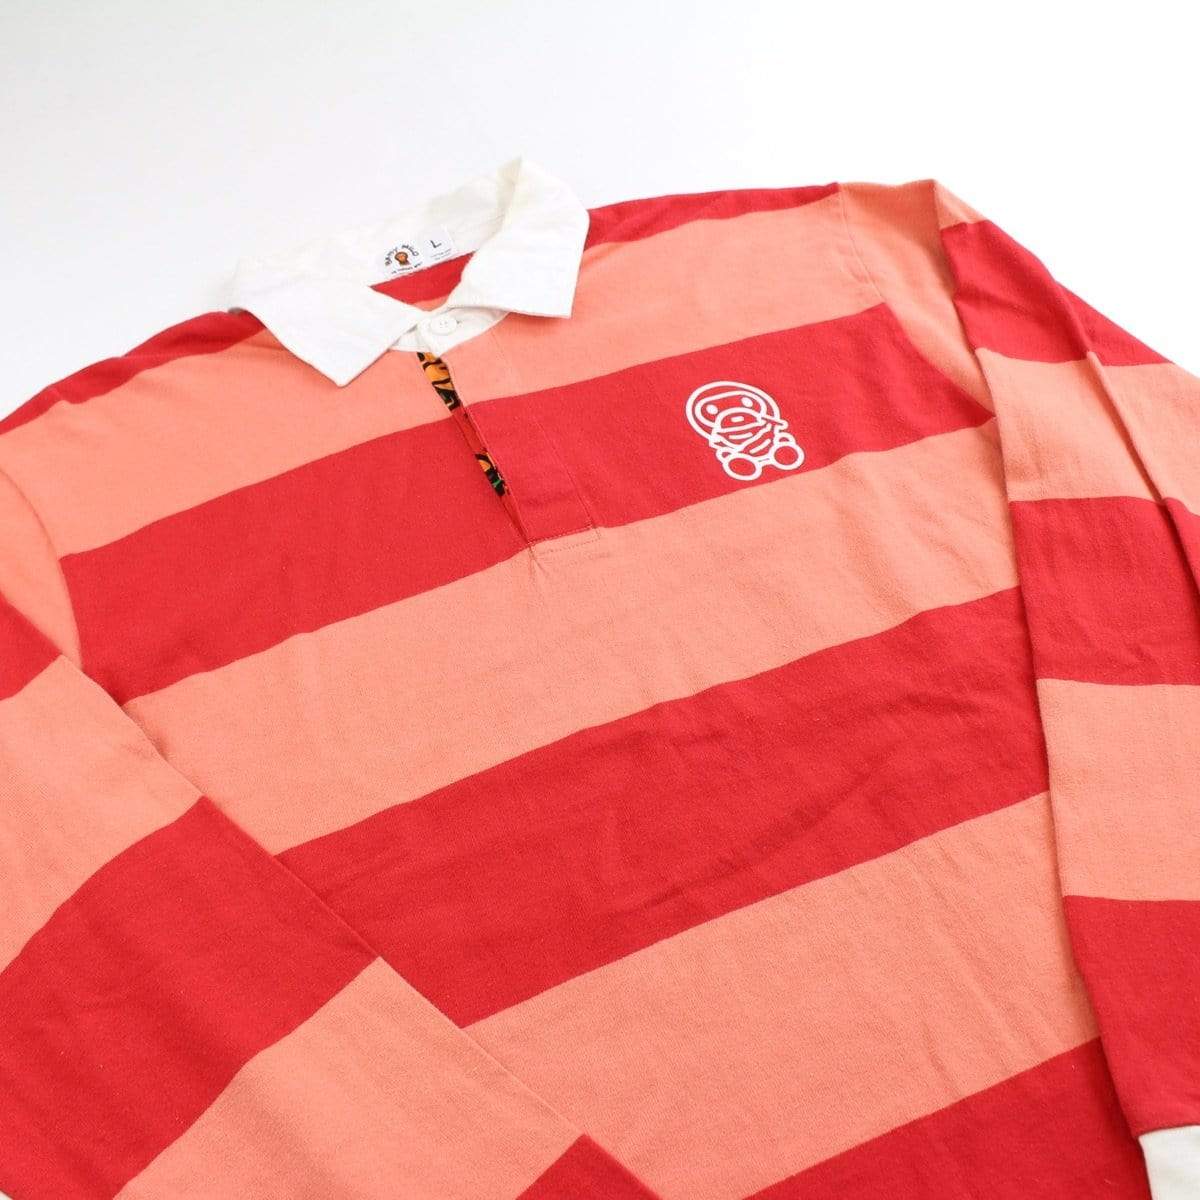 Bape baby milo peach stripe rugby shirt - SaruGeneral